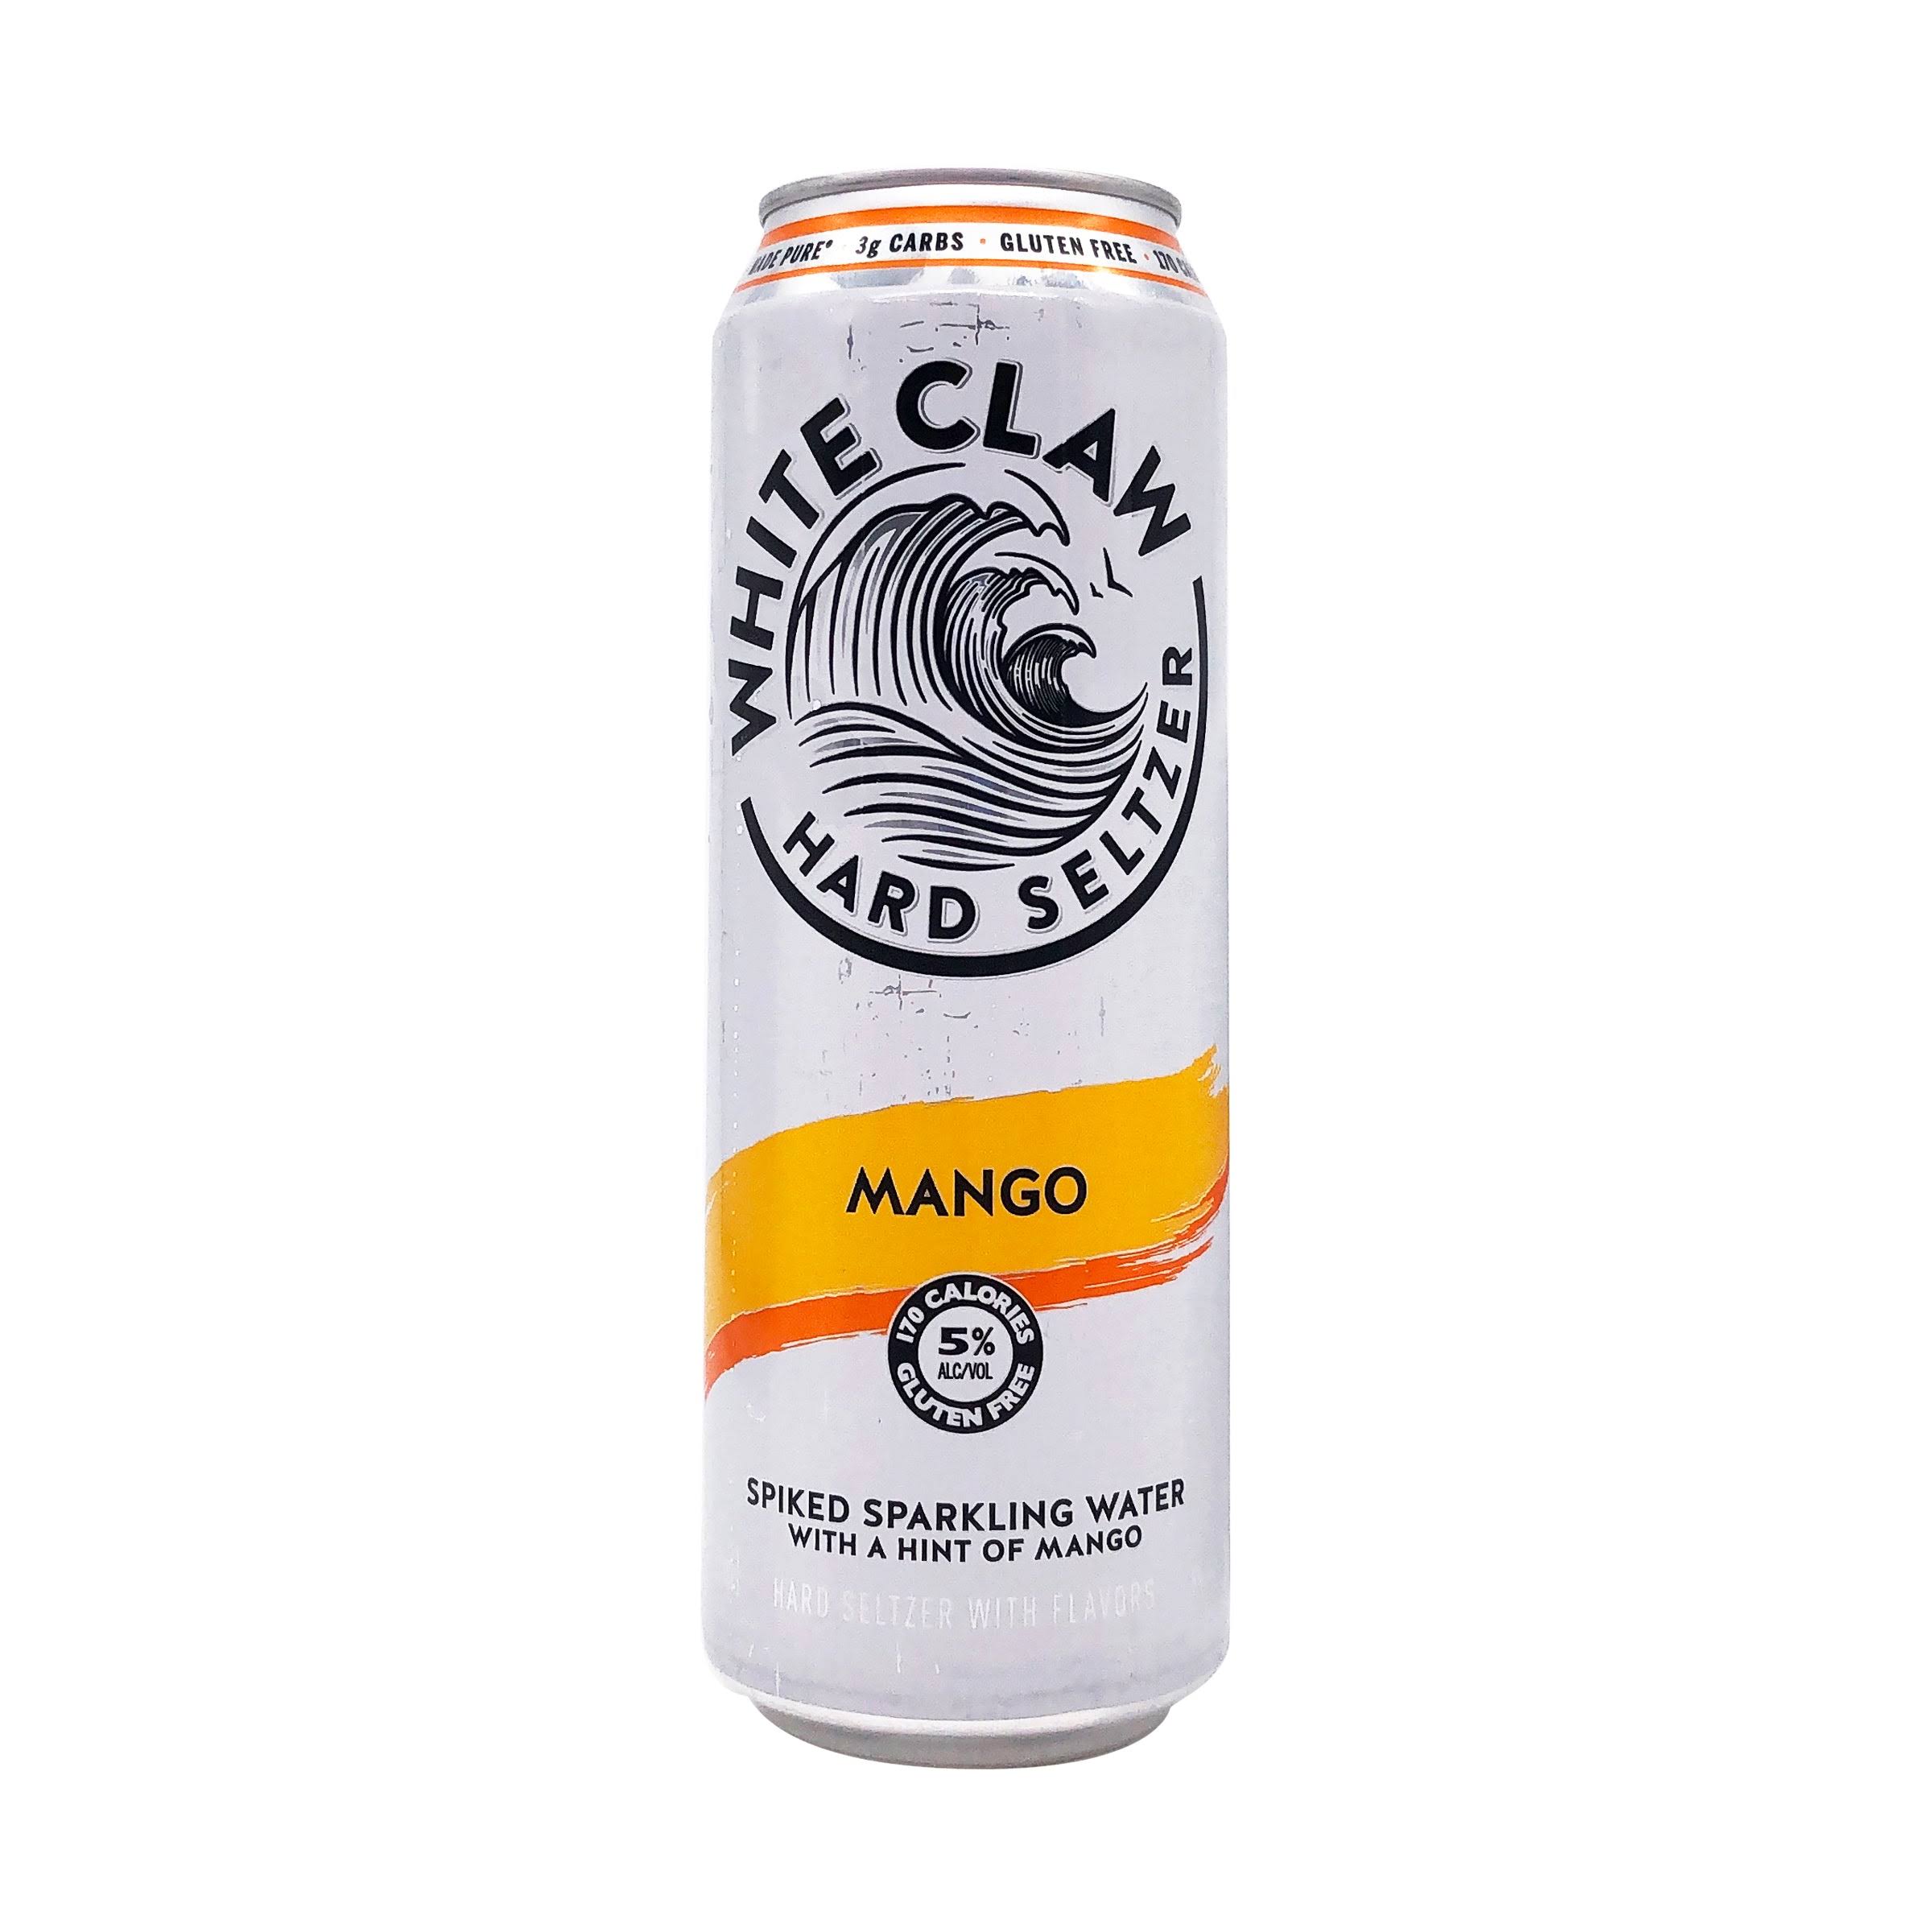 White Claw Hard Seltzer, Mango - 1 pt 3.2 fl oz (19.2 fl oz) 568 ml